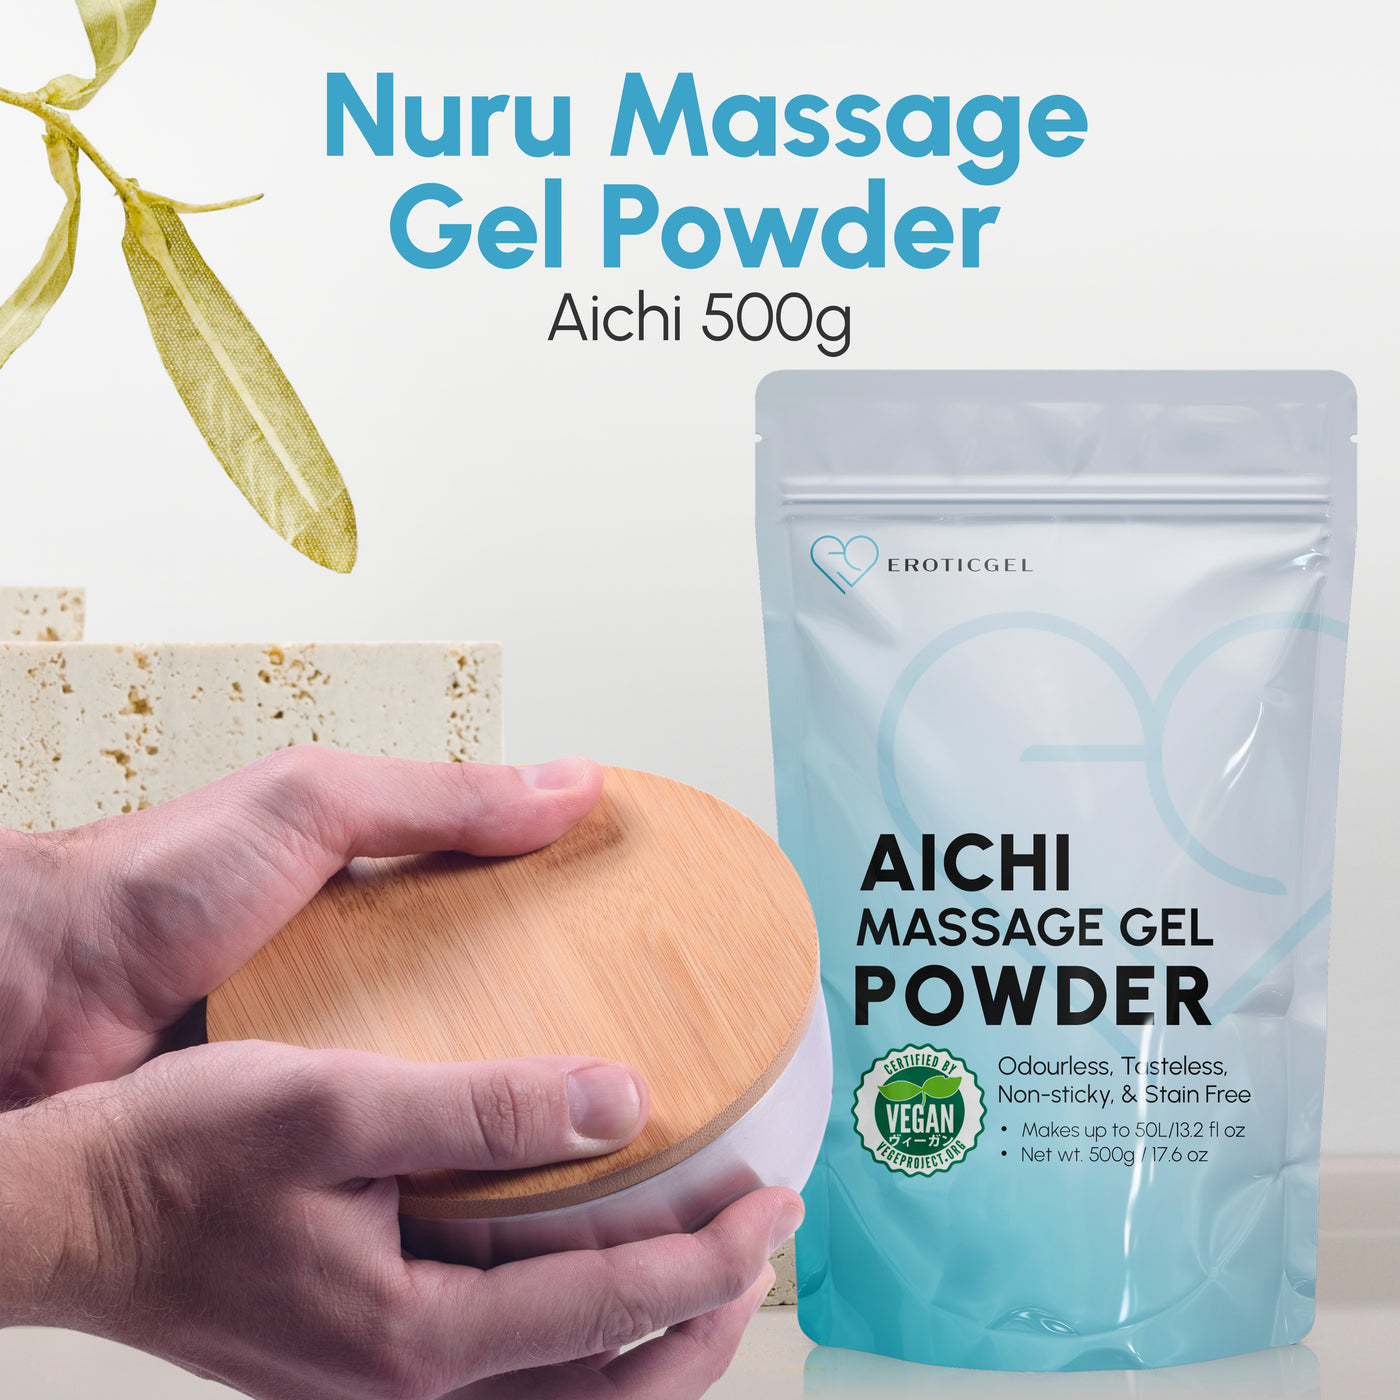 Nuru Massage Gel Powder 500g Resealable Sachet | Nori Seaweed and Aloe Vera | Made in Japan | 50L / 13.2 Gal |